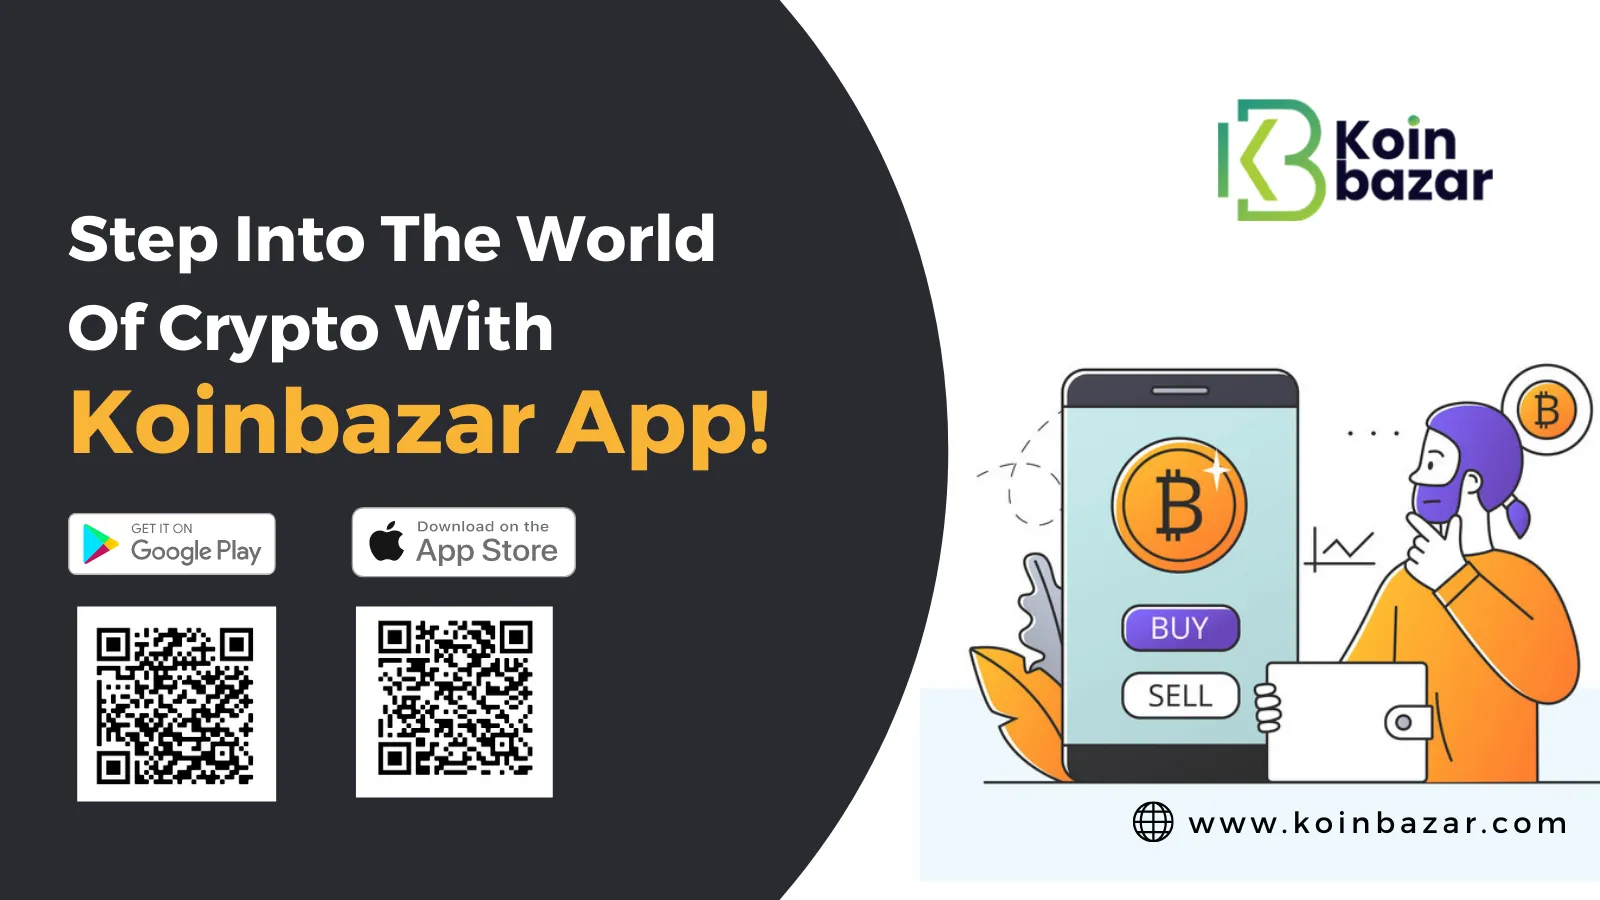 Step Into The World Of Crypto With Koinbazar App